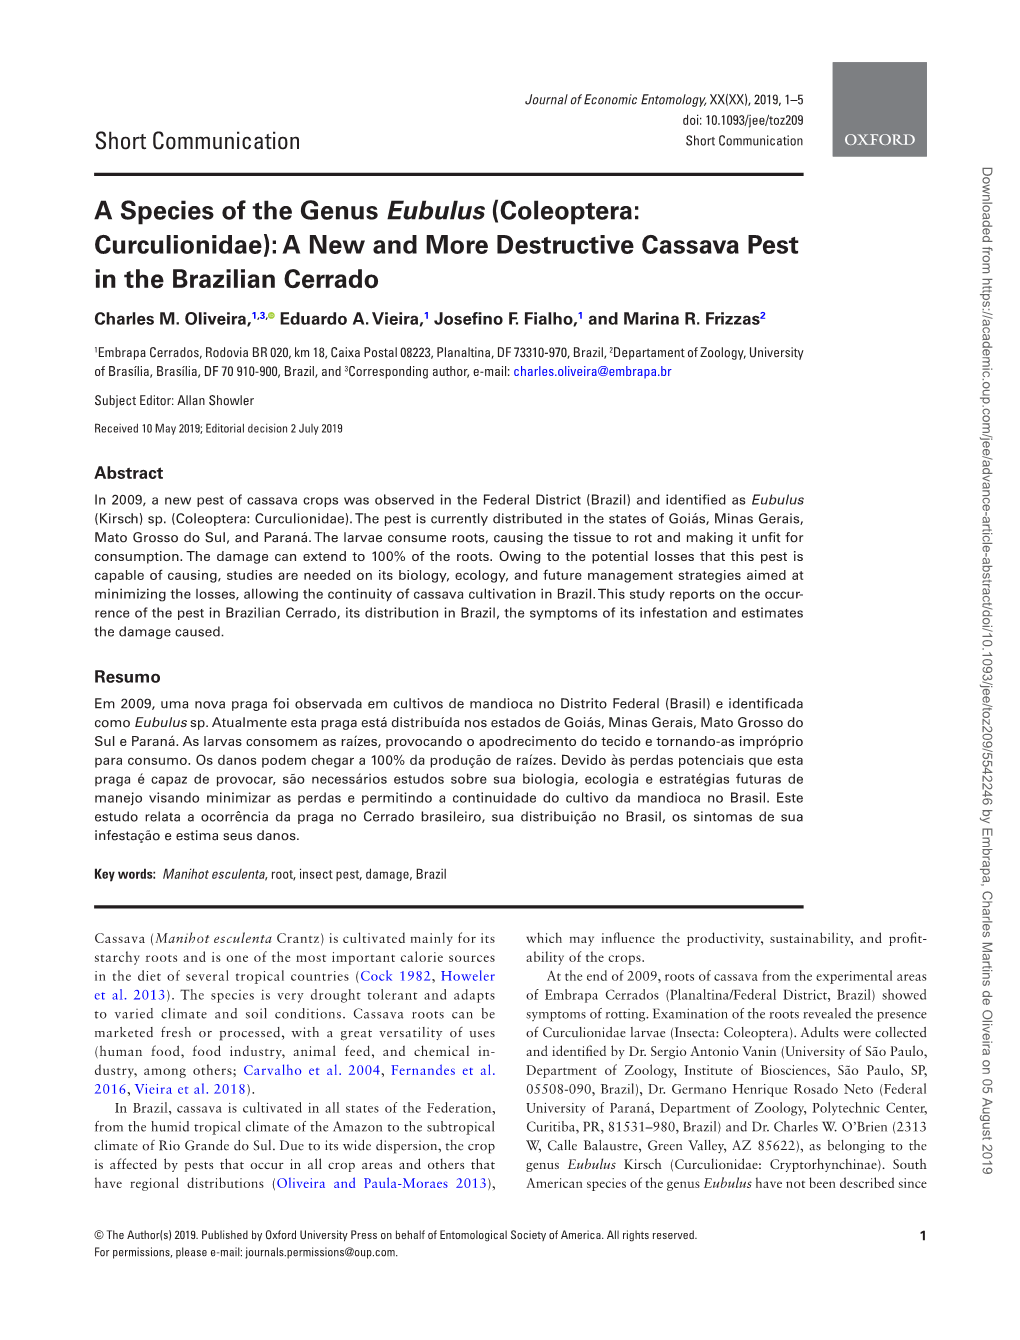 A Species of the Genus Eubulus (Coleoptera: Curculionidae): a New and More Destructive Cassava Pest in the Brazilian Cerrado